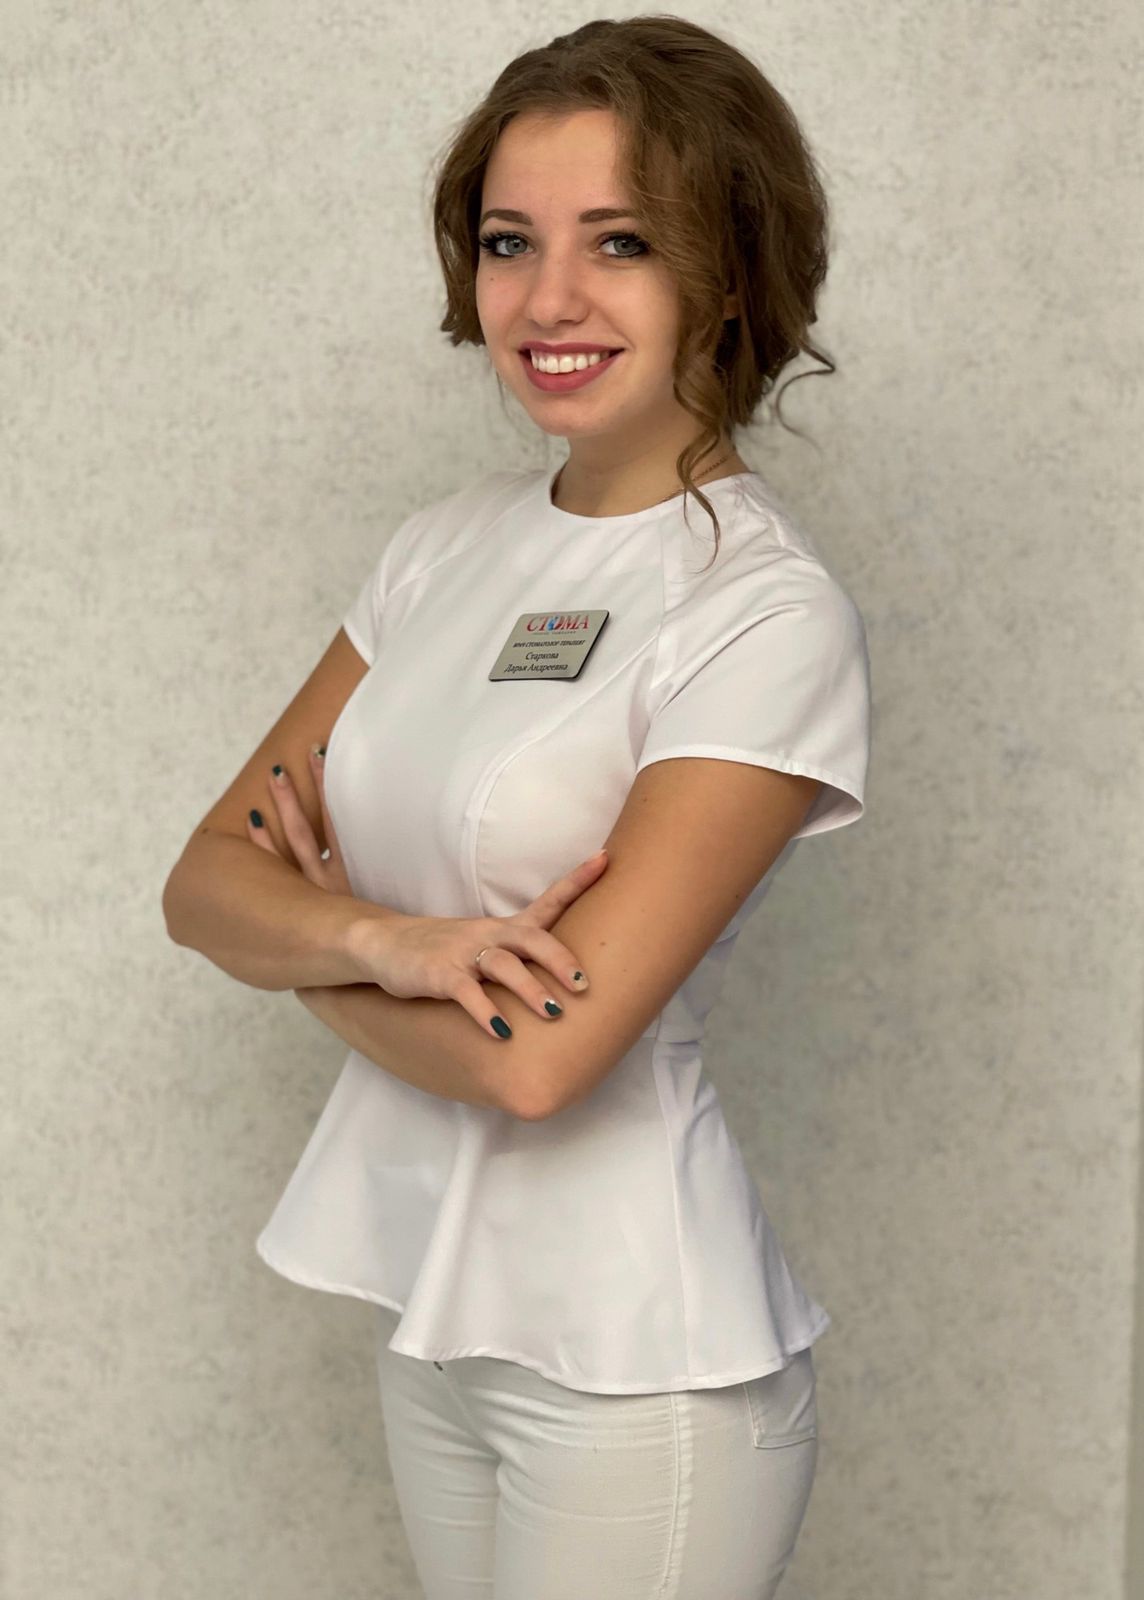 врач стоматолог-терапевт, гигиенист Старкова (Шкуропат) Дарья Андреевна